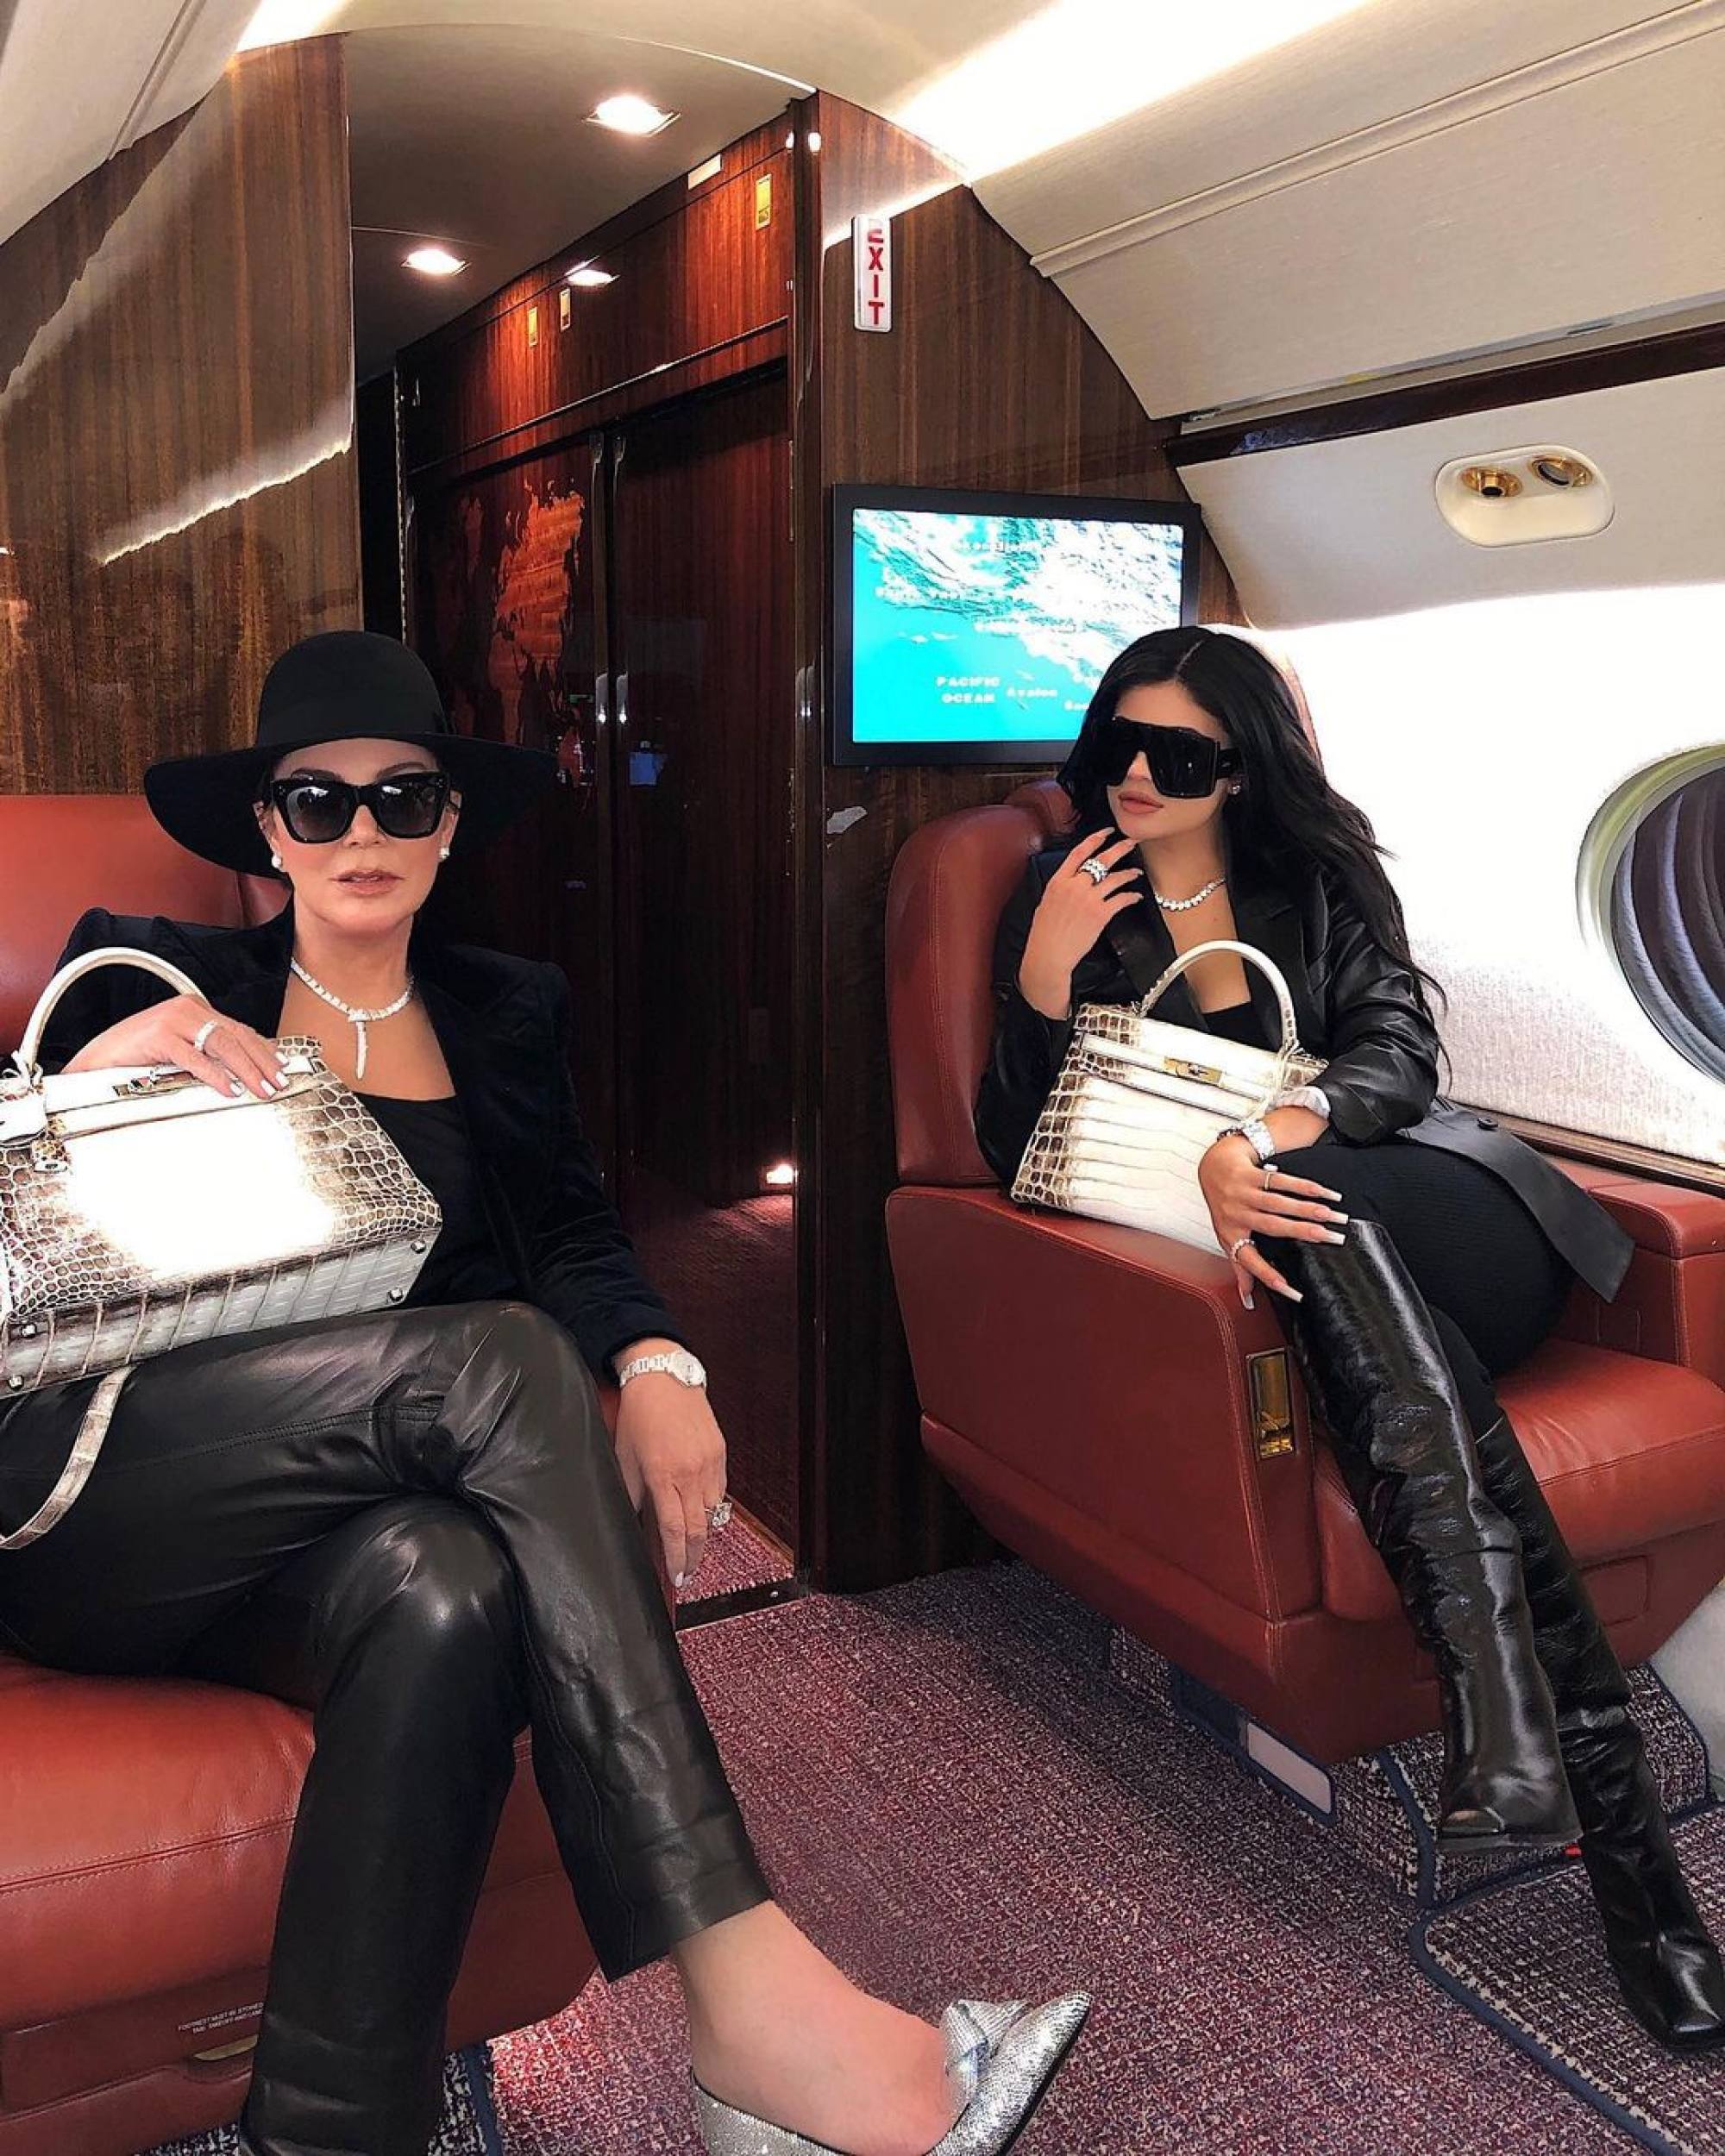 The Kardashian-Jenner clan's most expensive Hermès handbags